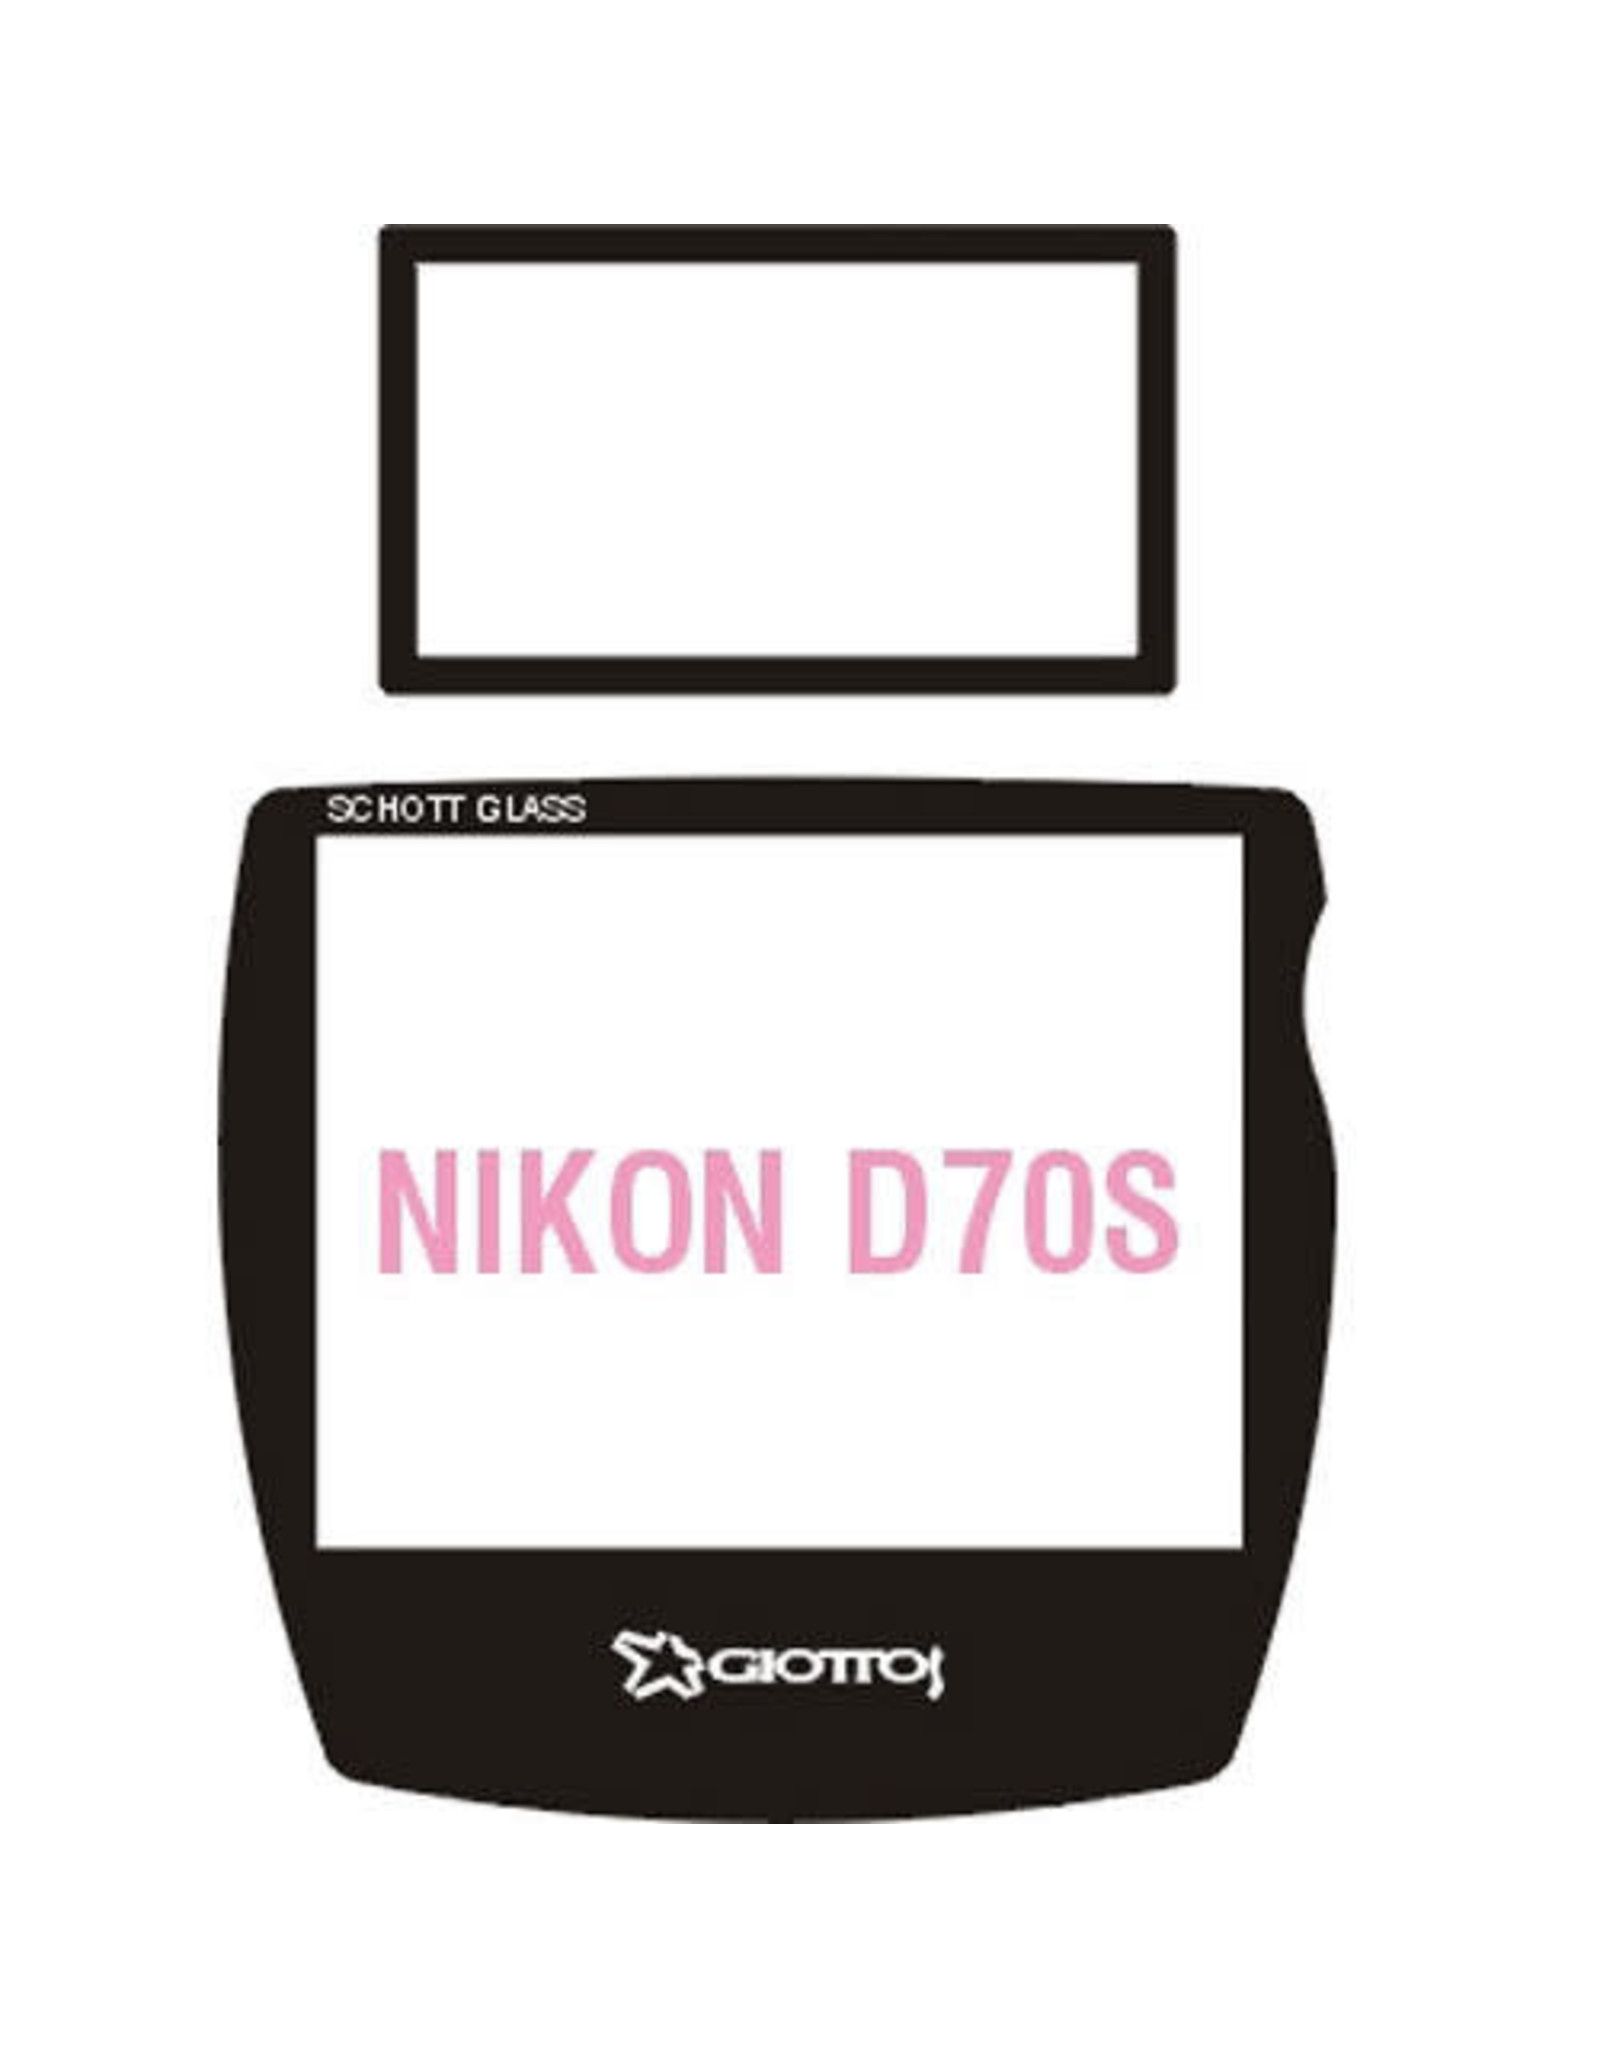 Giottos Aegis Professional M-C Schott Glass Screen Protector for Nikon D70S